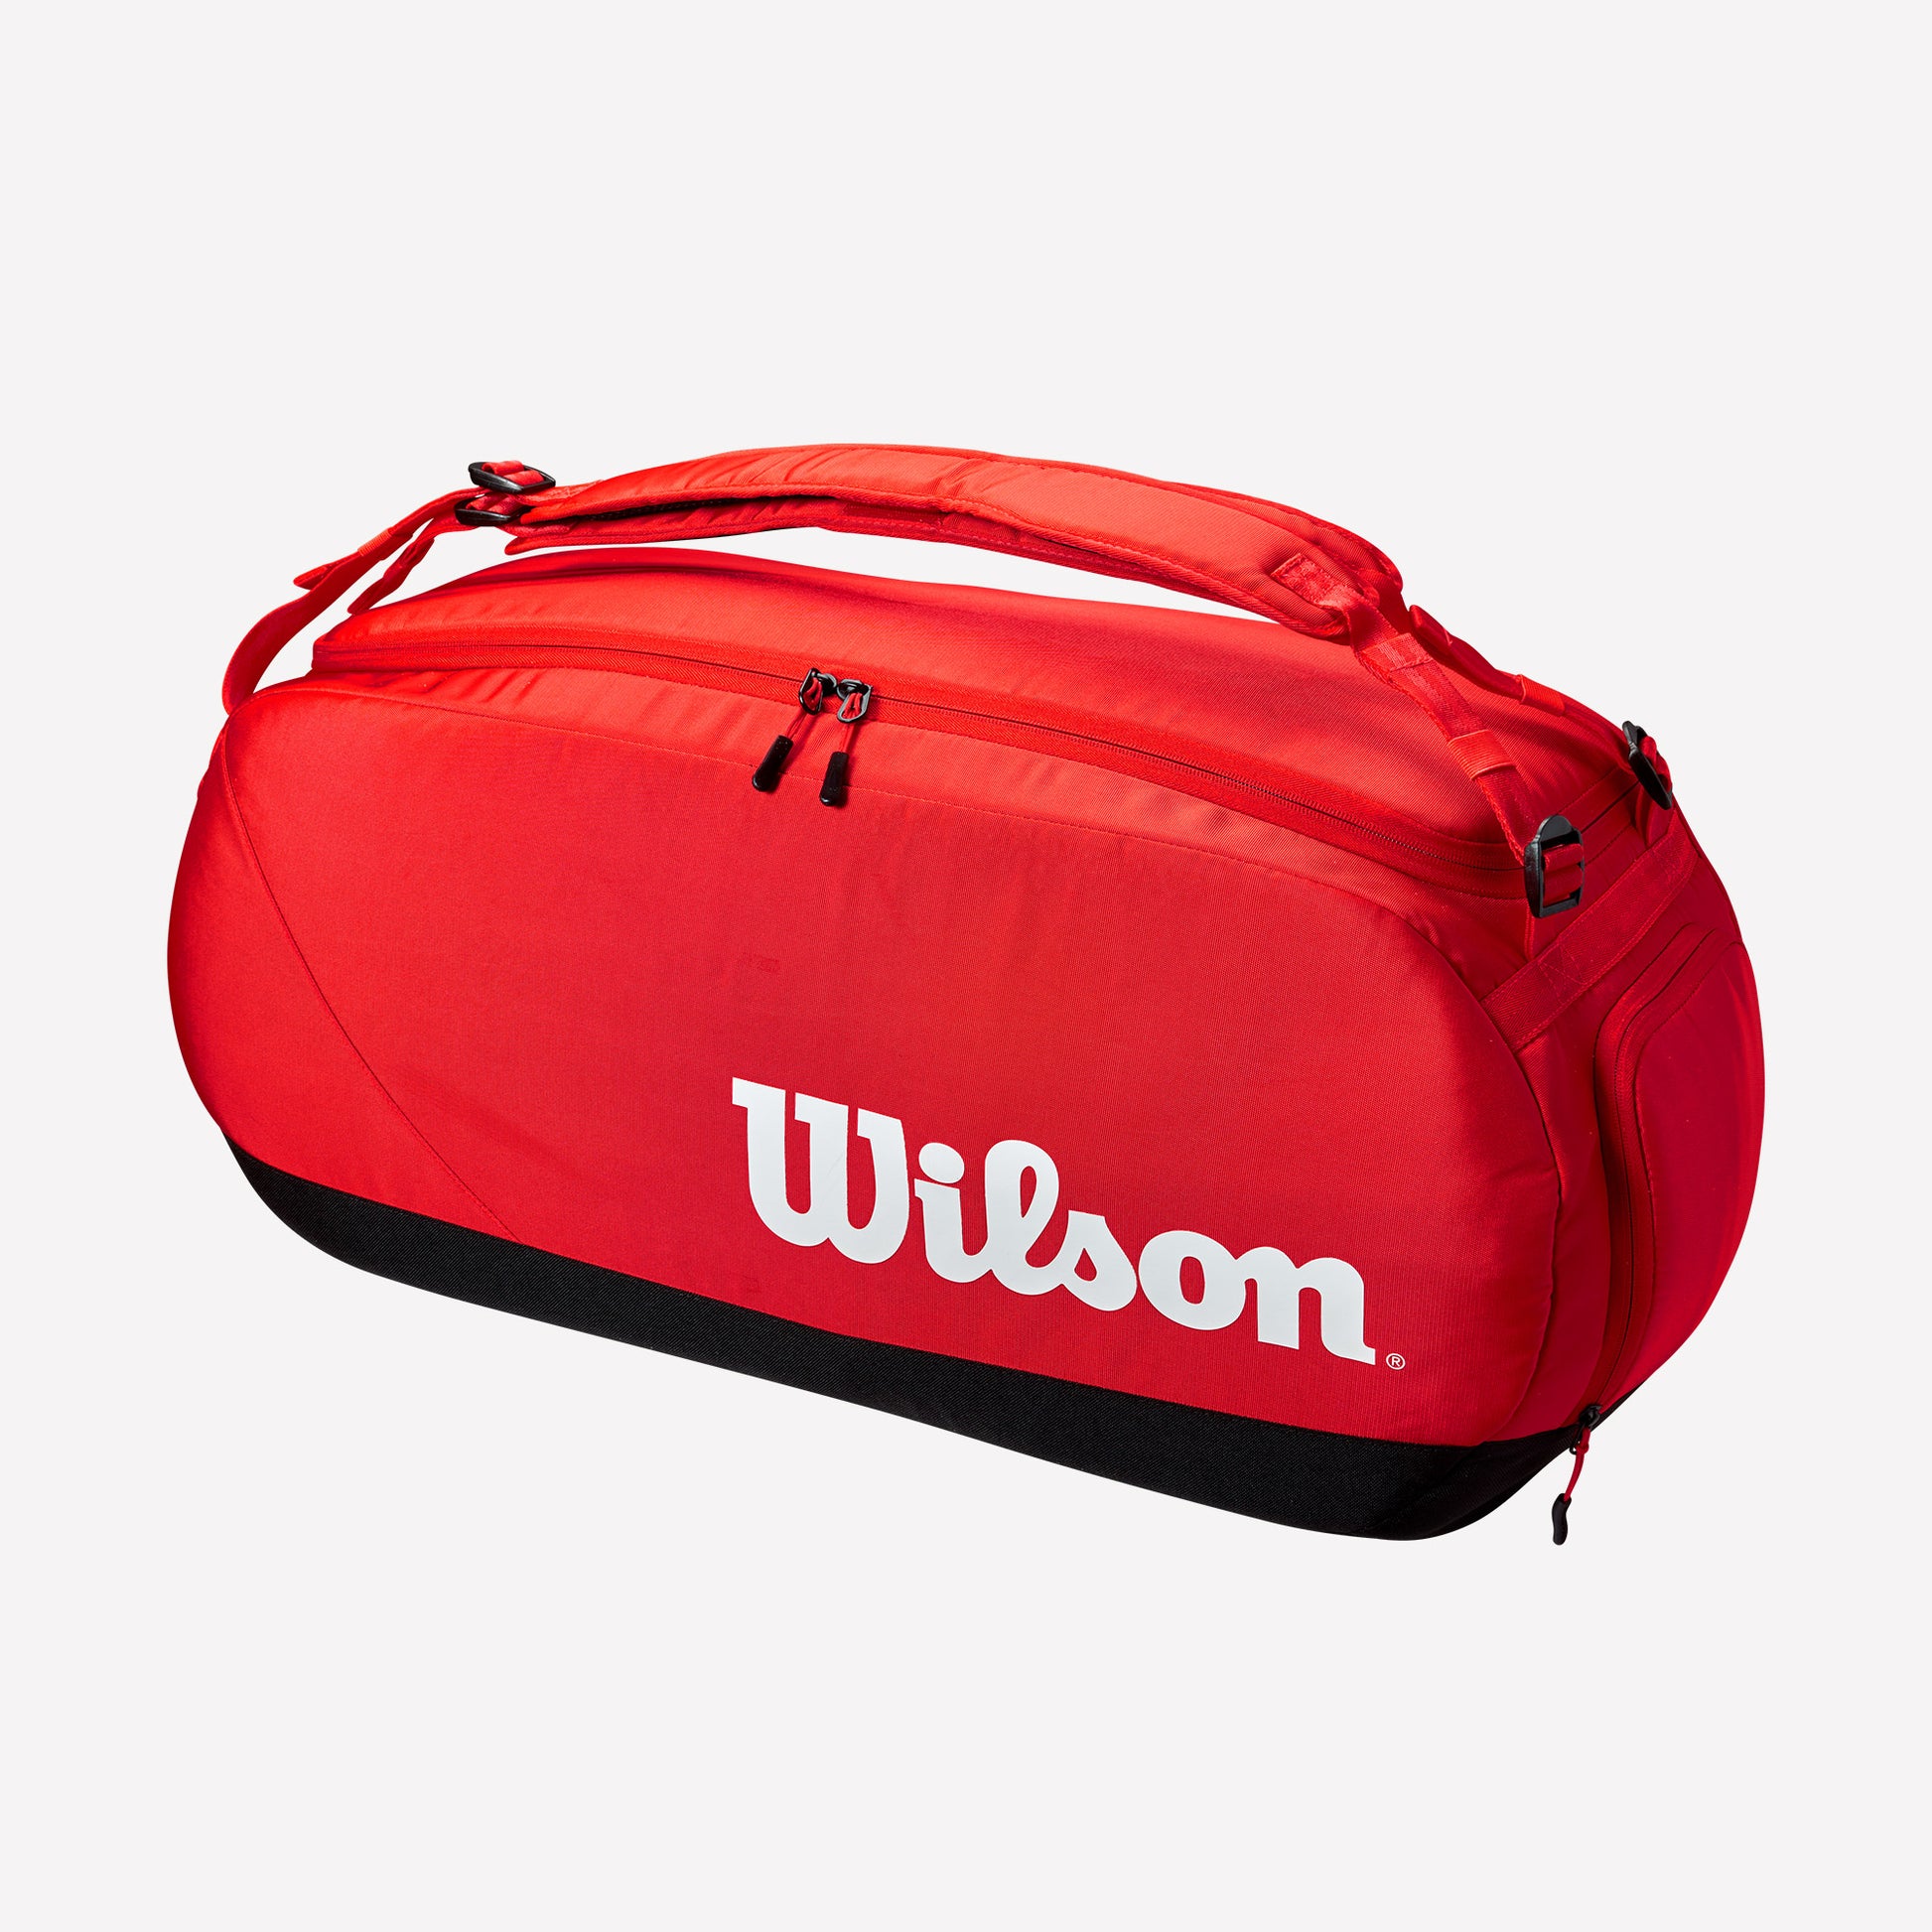 Wilson Super Tour Tennis Duffle Bag Large Red (1)